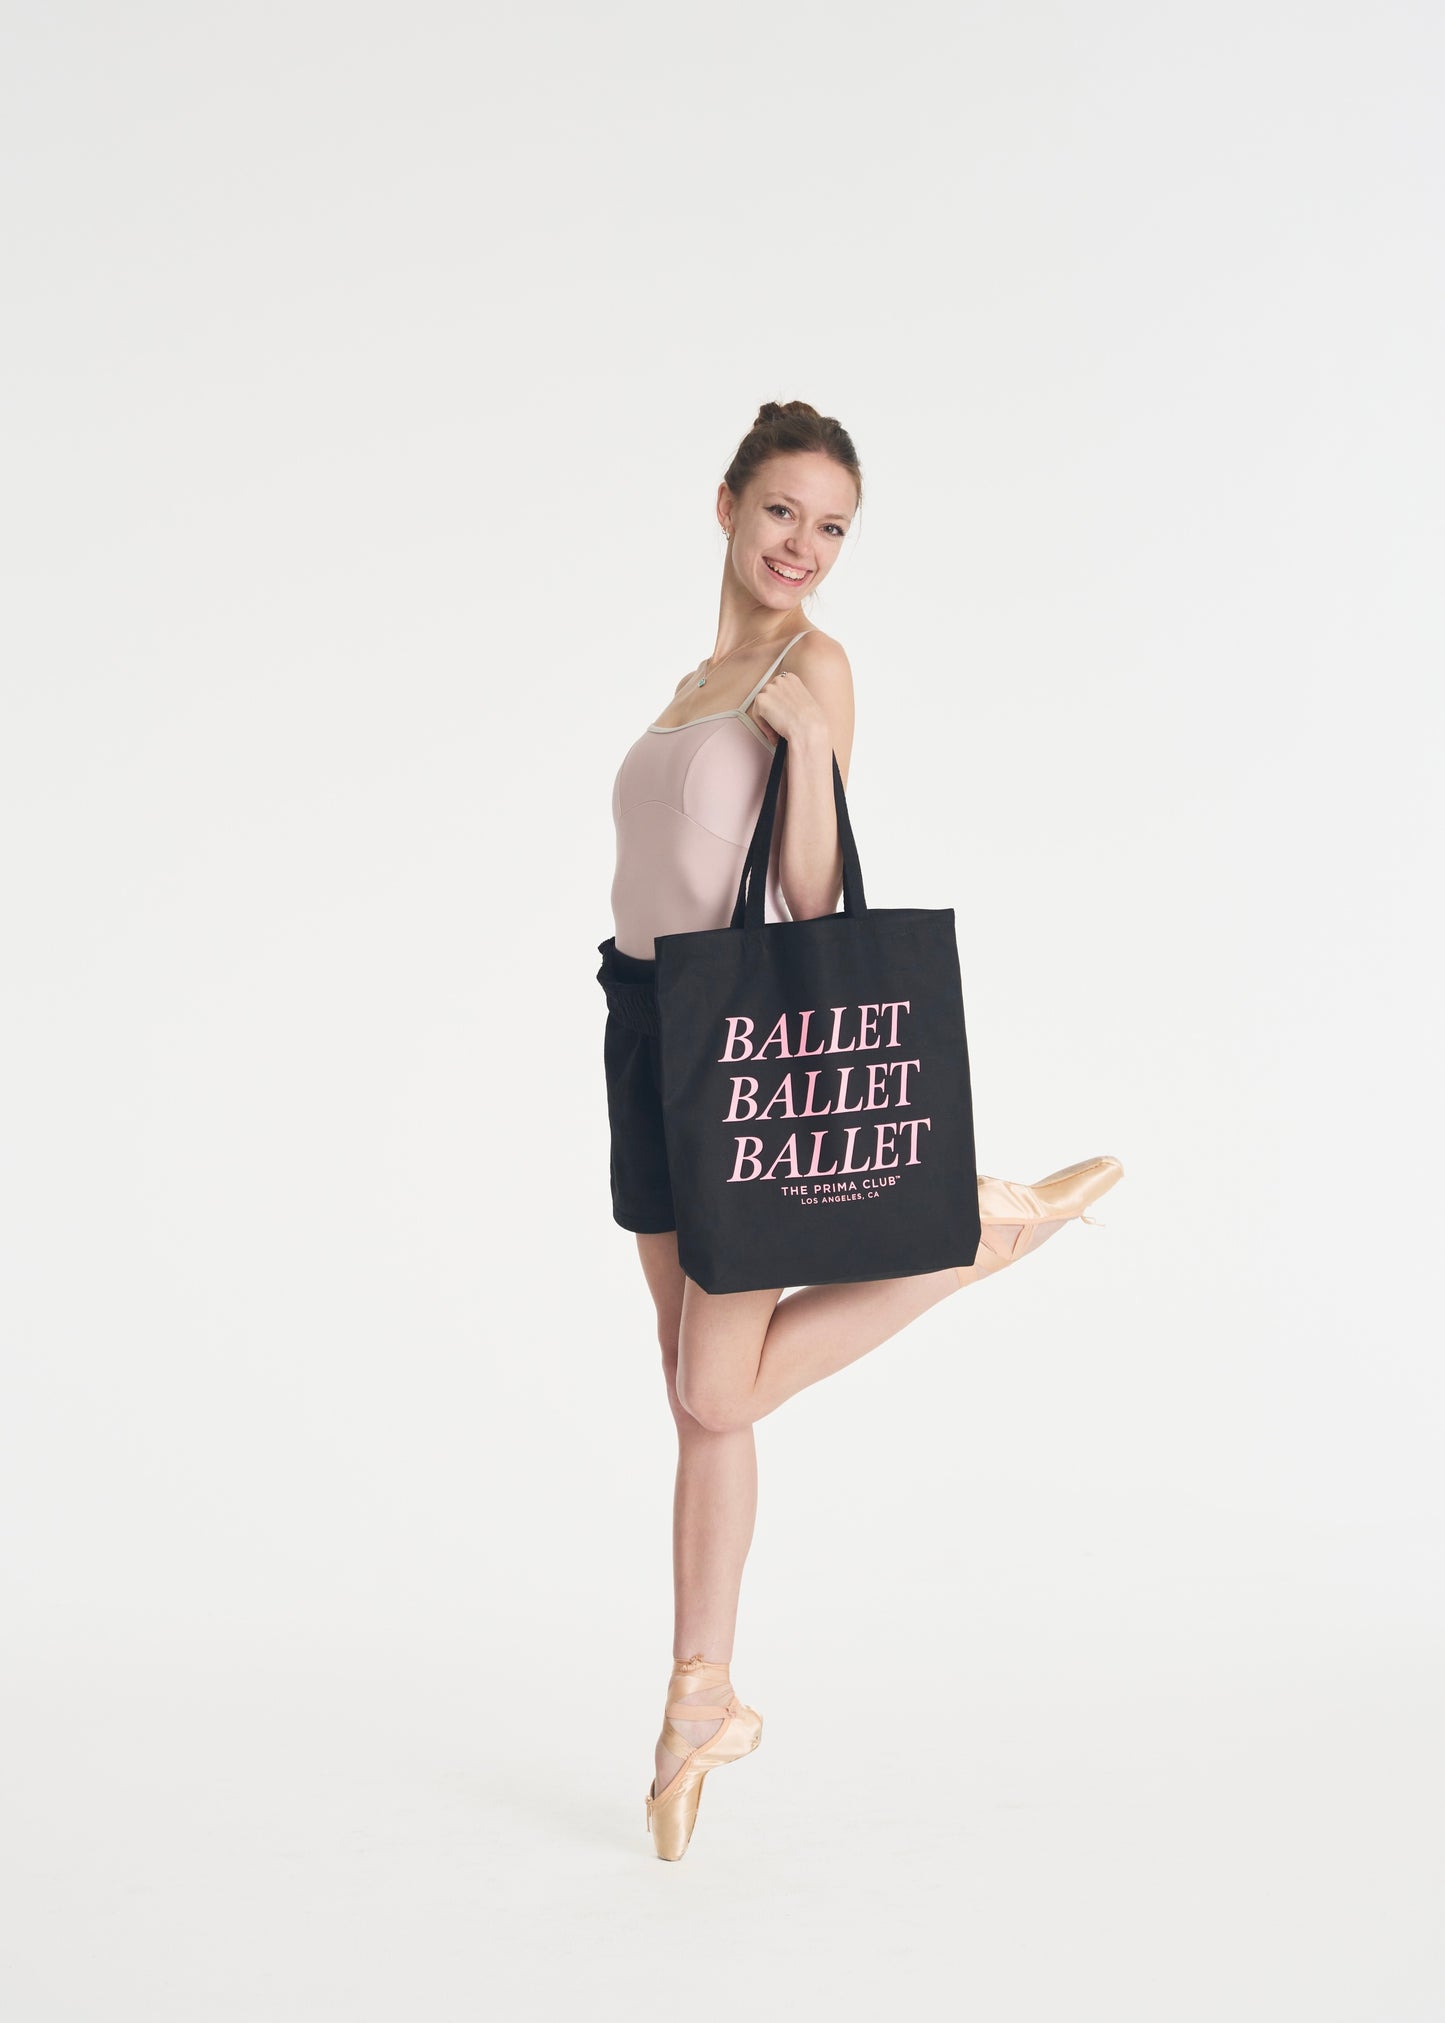 model dancing with black ballet tote bag